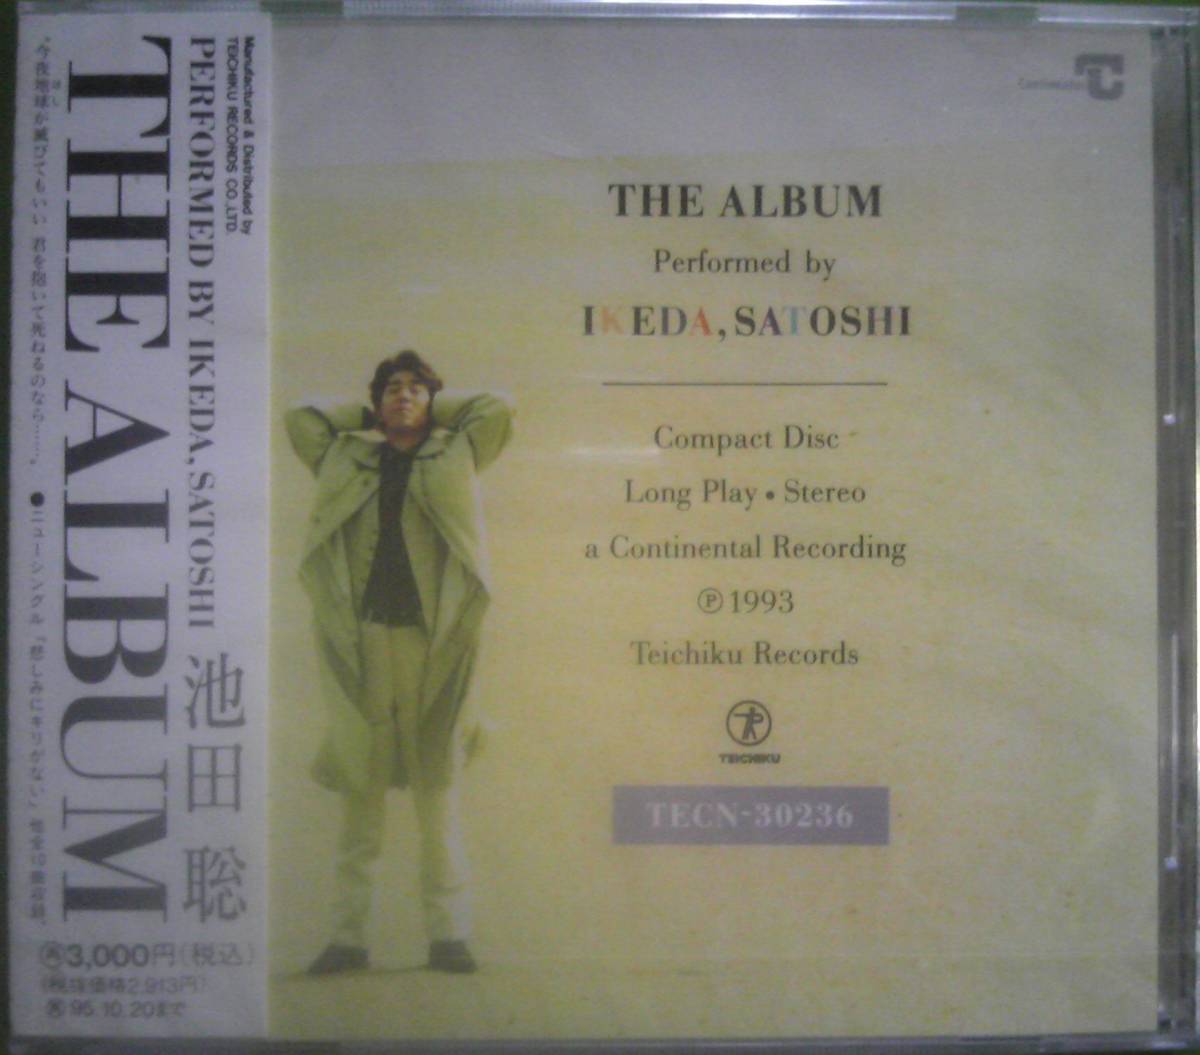  Ikeda Satoshi THE ALBUM